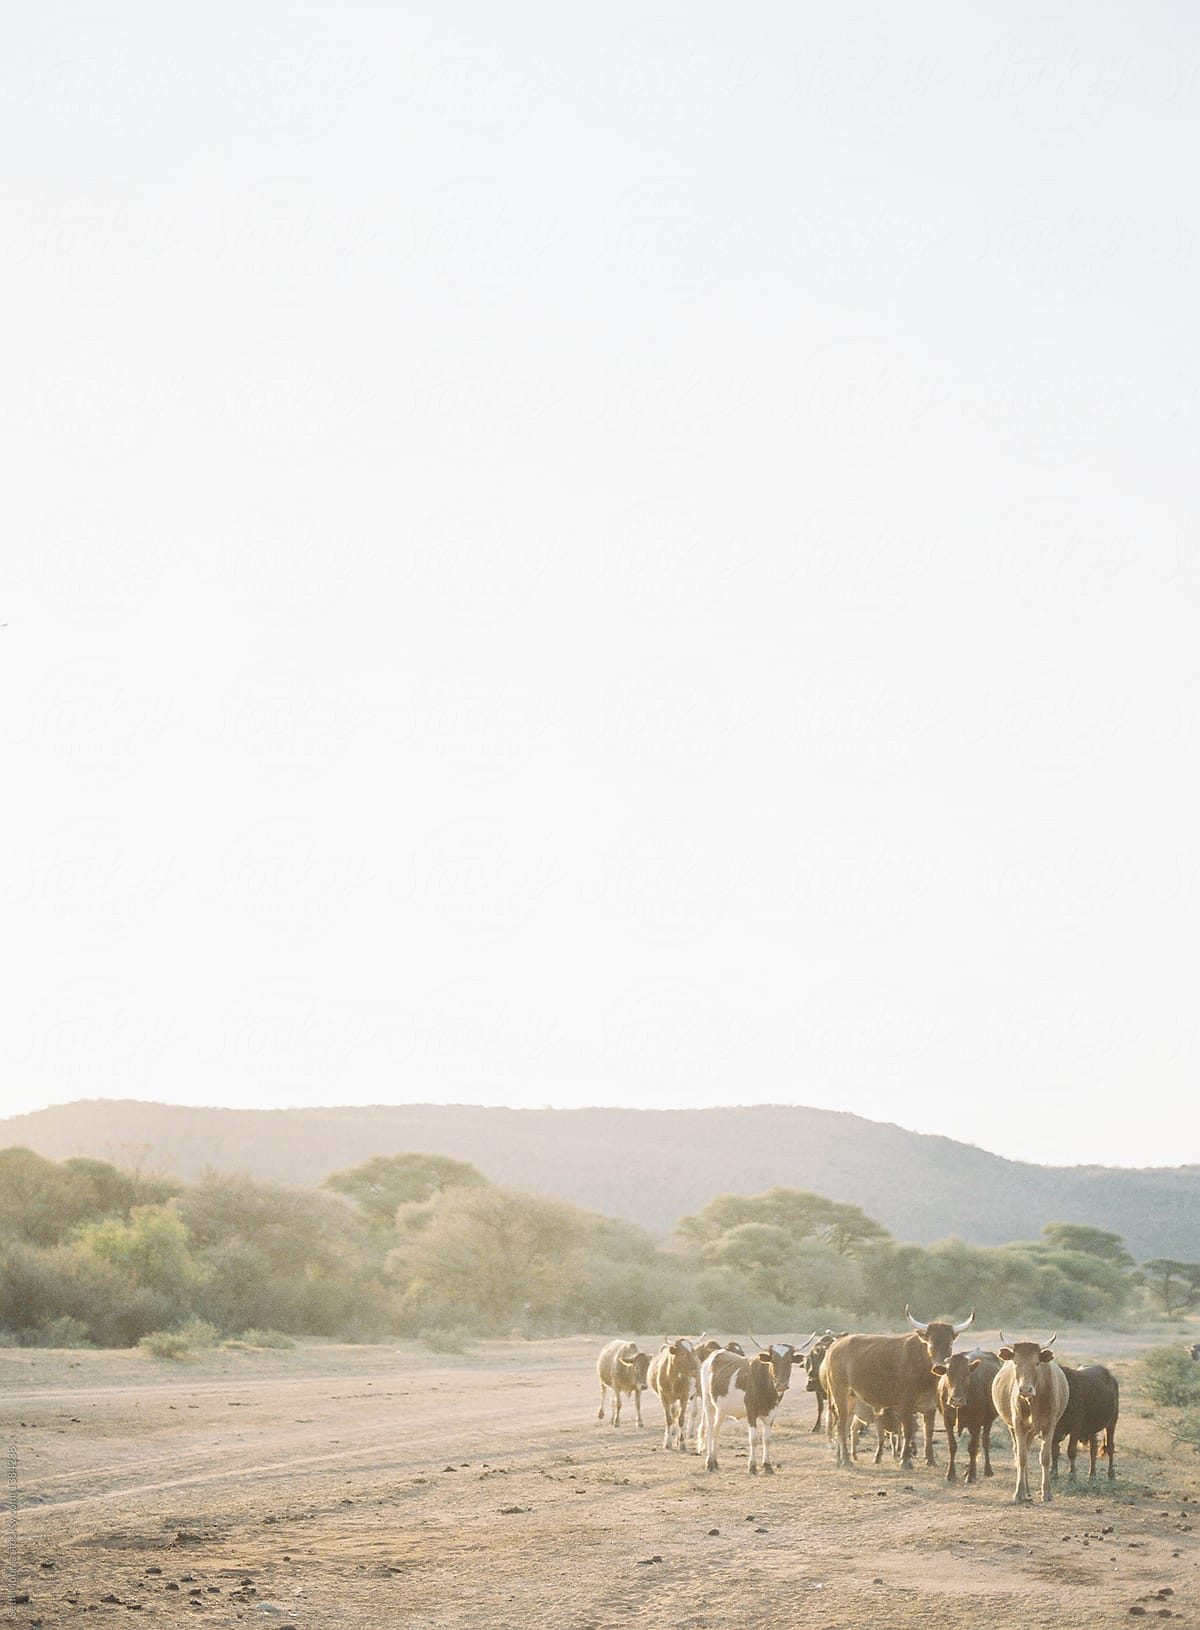 Cattle grazing in botswana